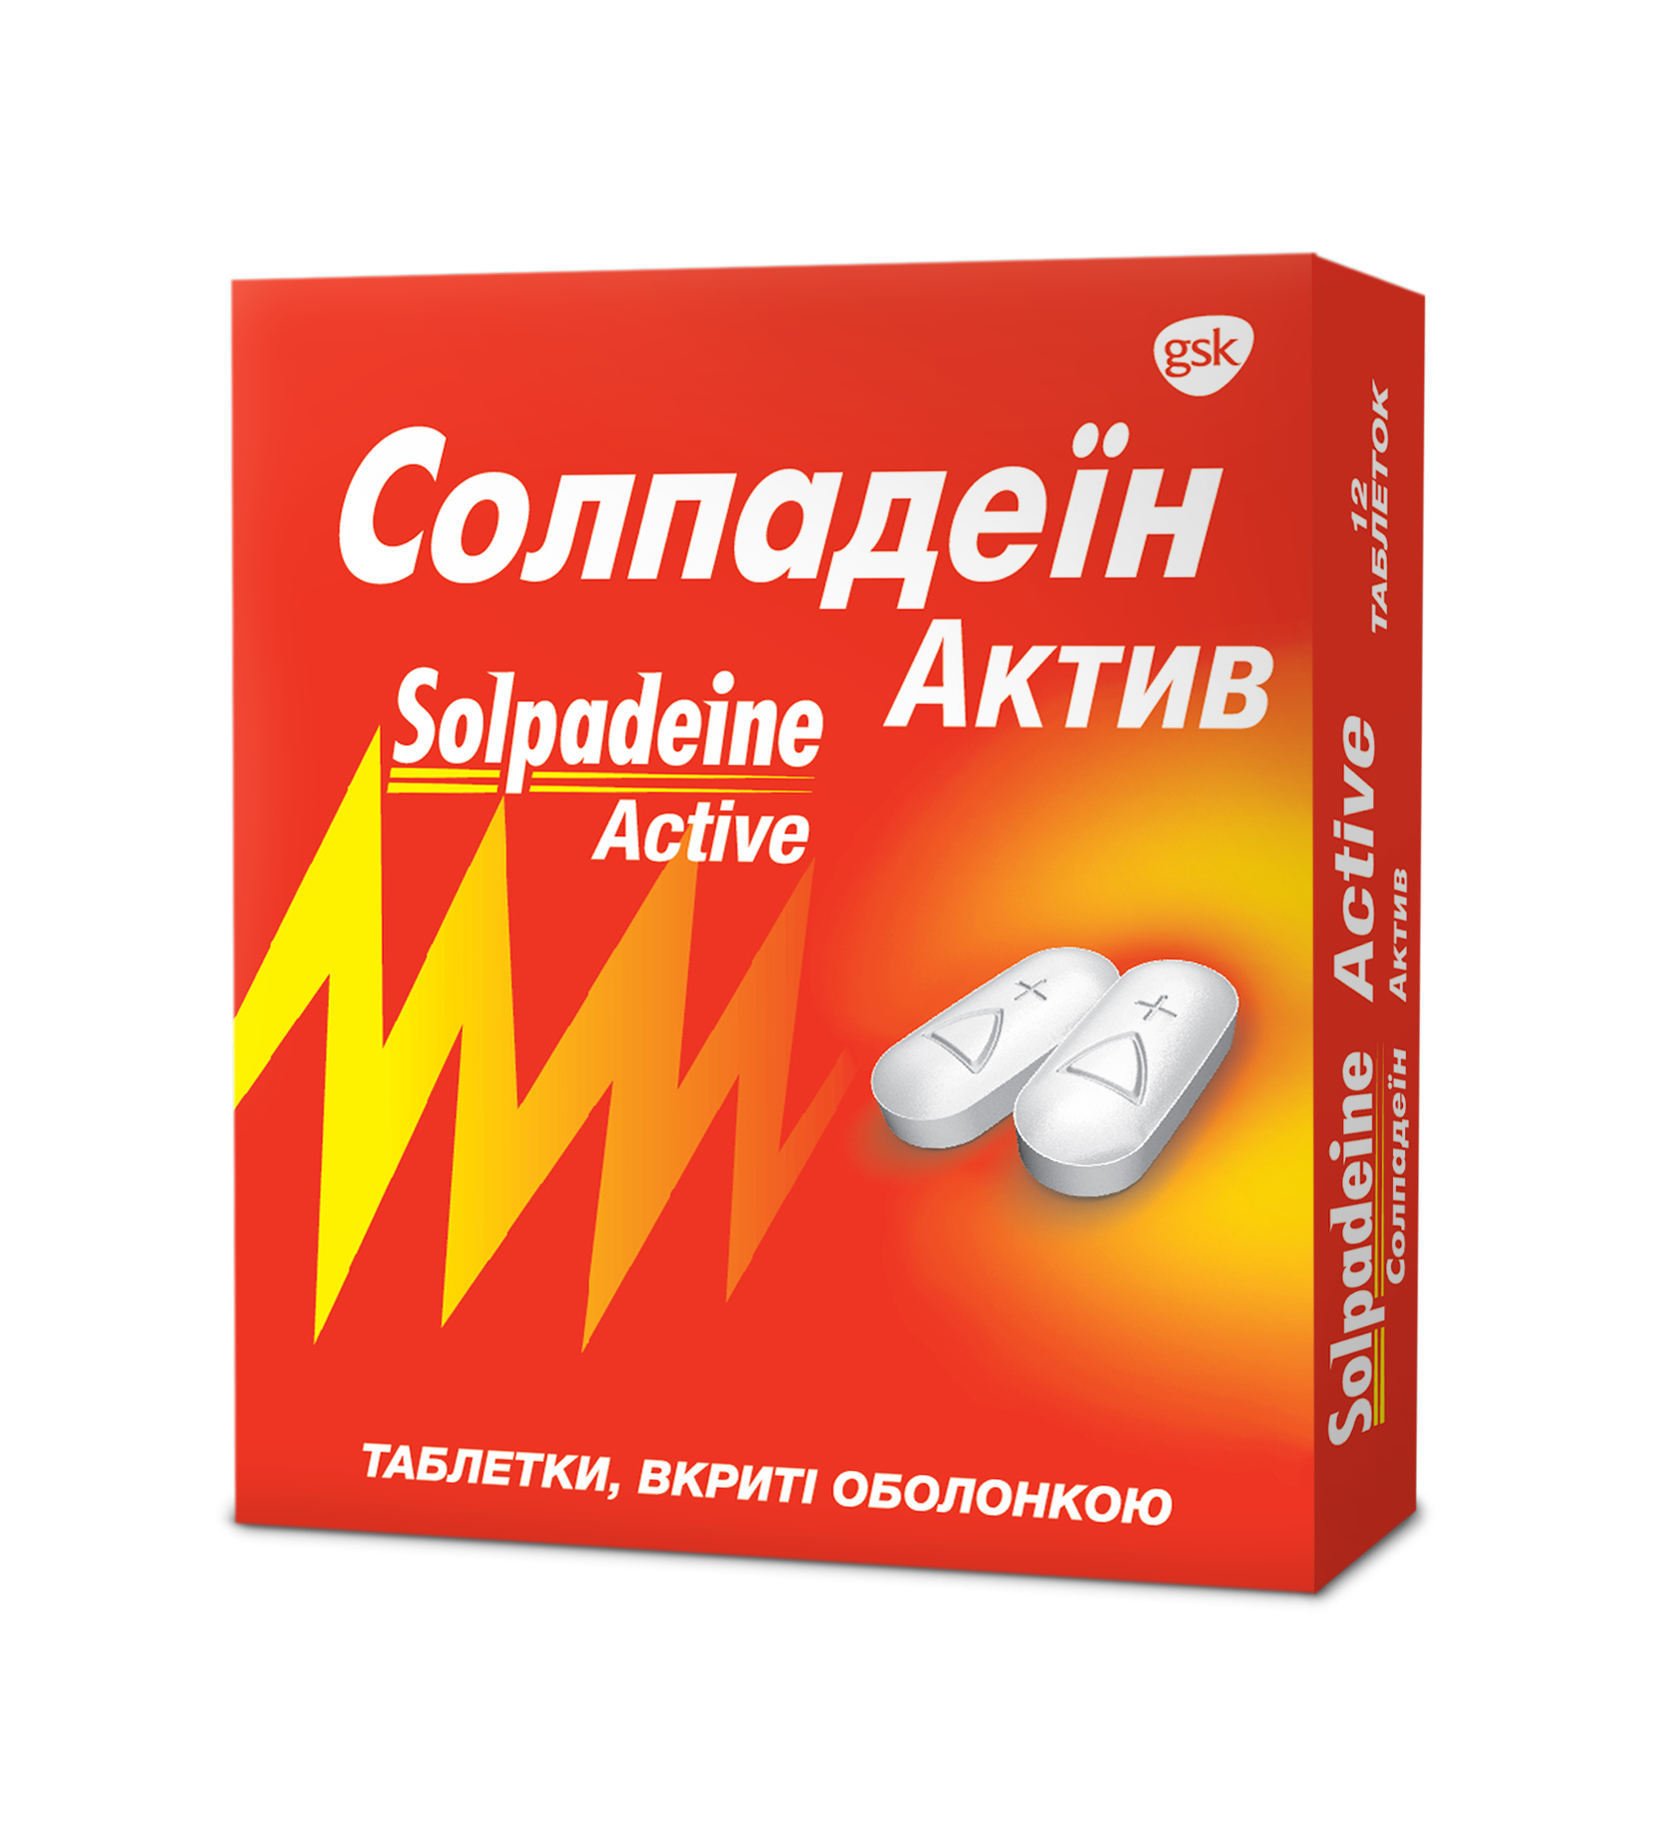 Аналоги препарата Солпадеин Актив таблетки, 12 шт. - GSK: по .